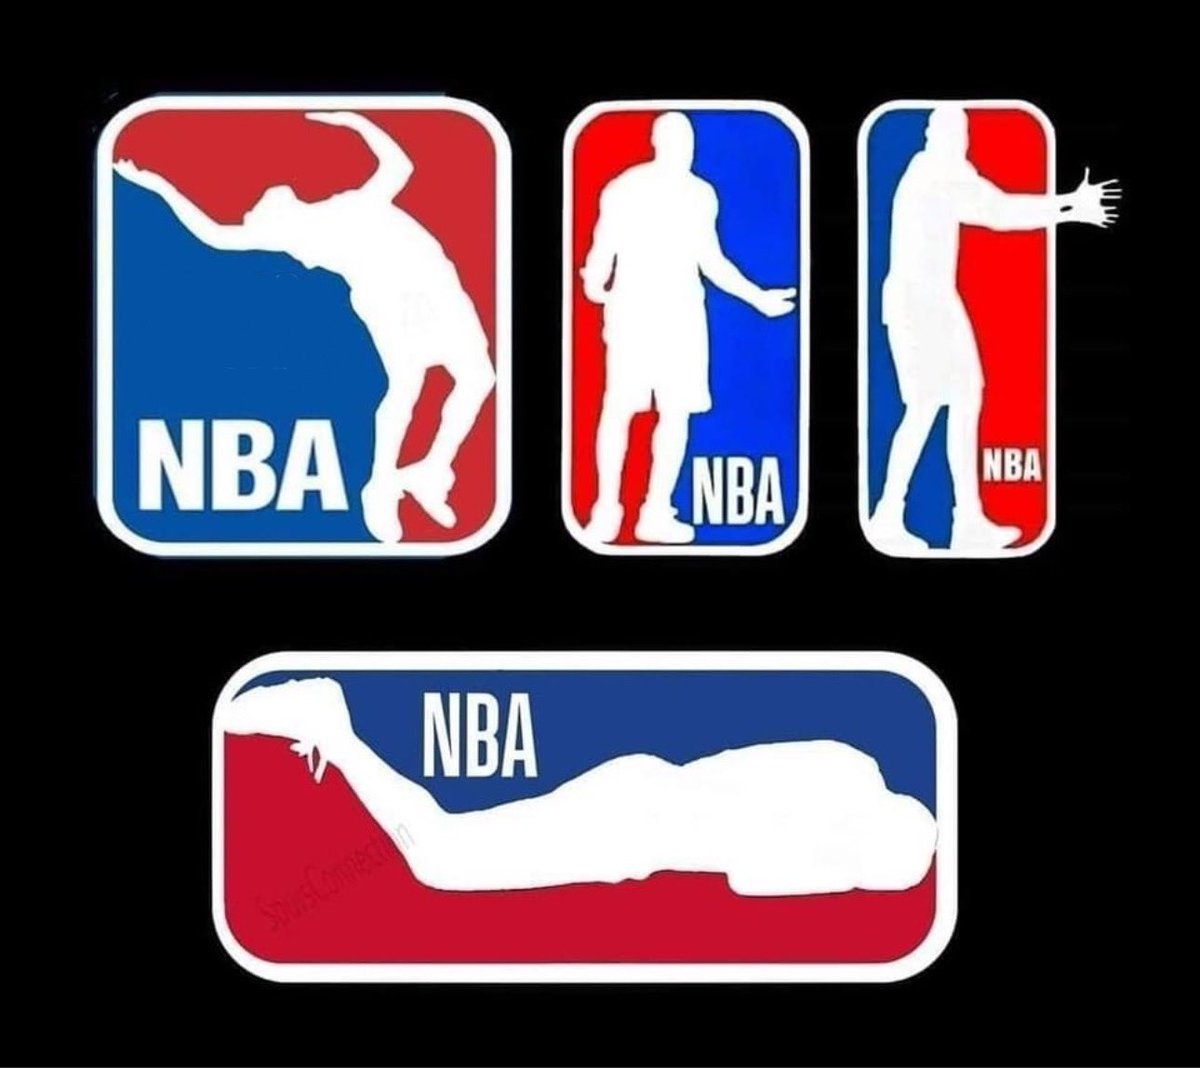 If Lebron was the NBA logo: